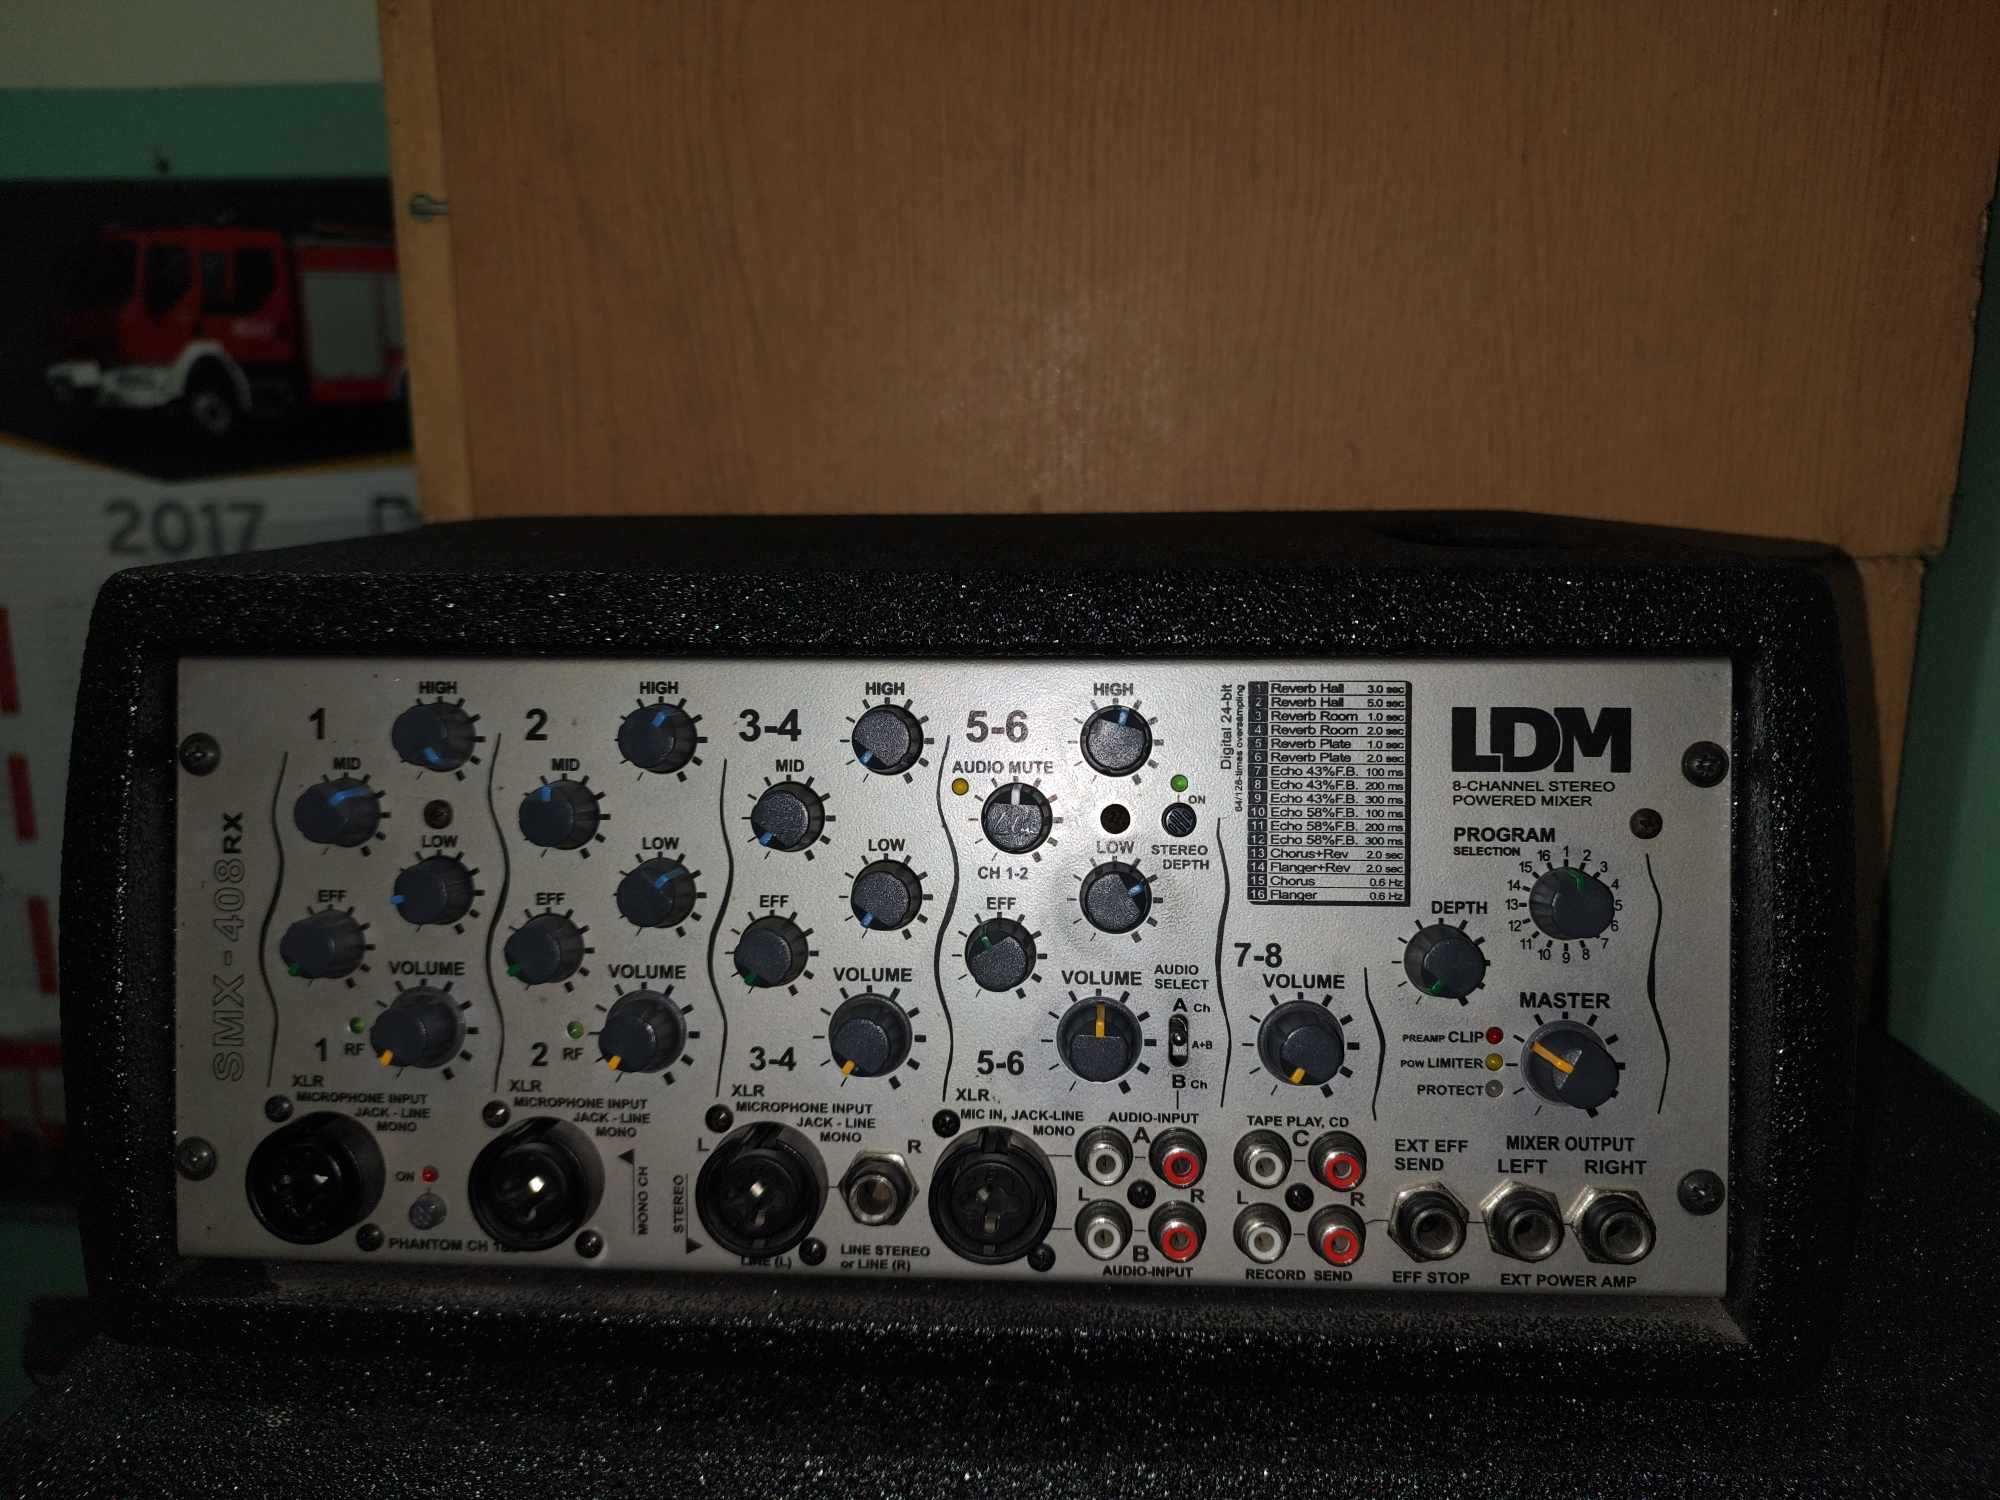 Powermixer LDM SMX-408RX